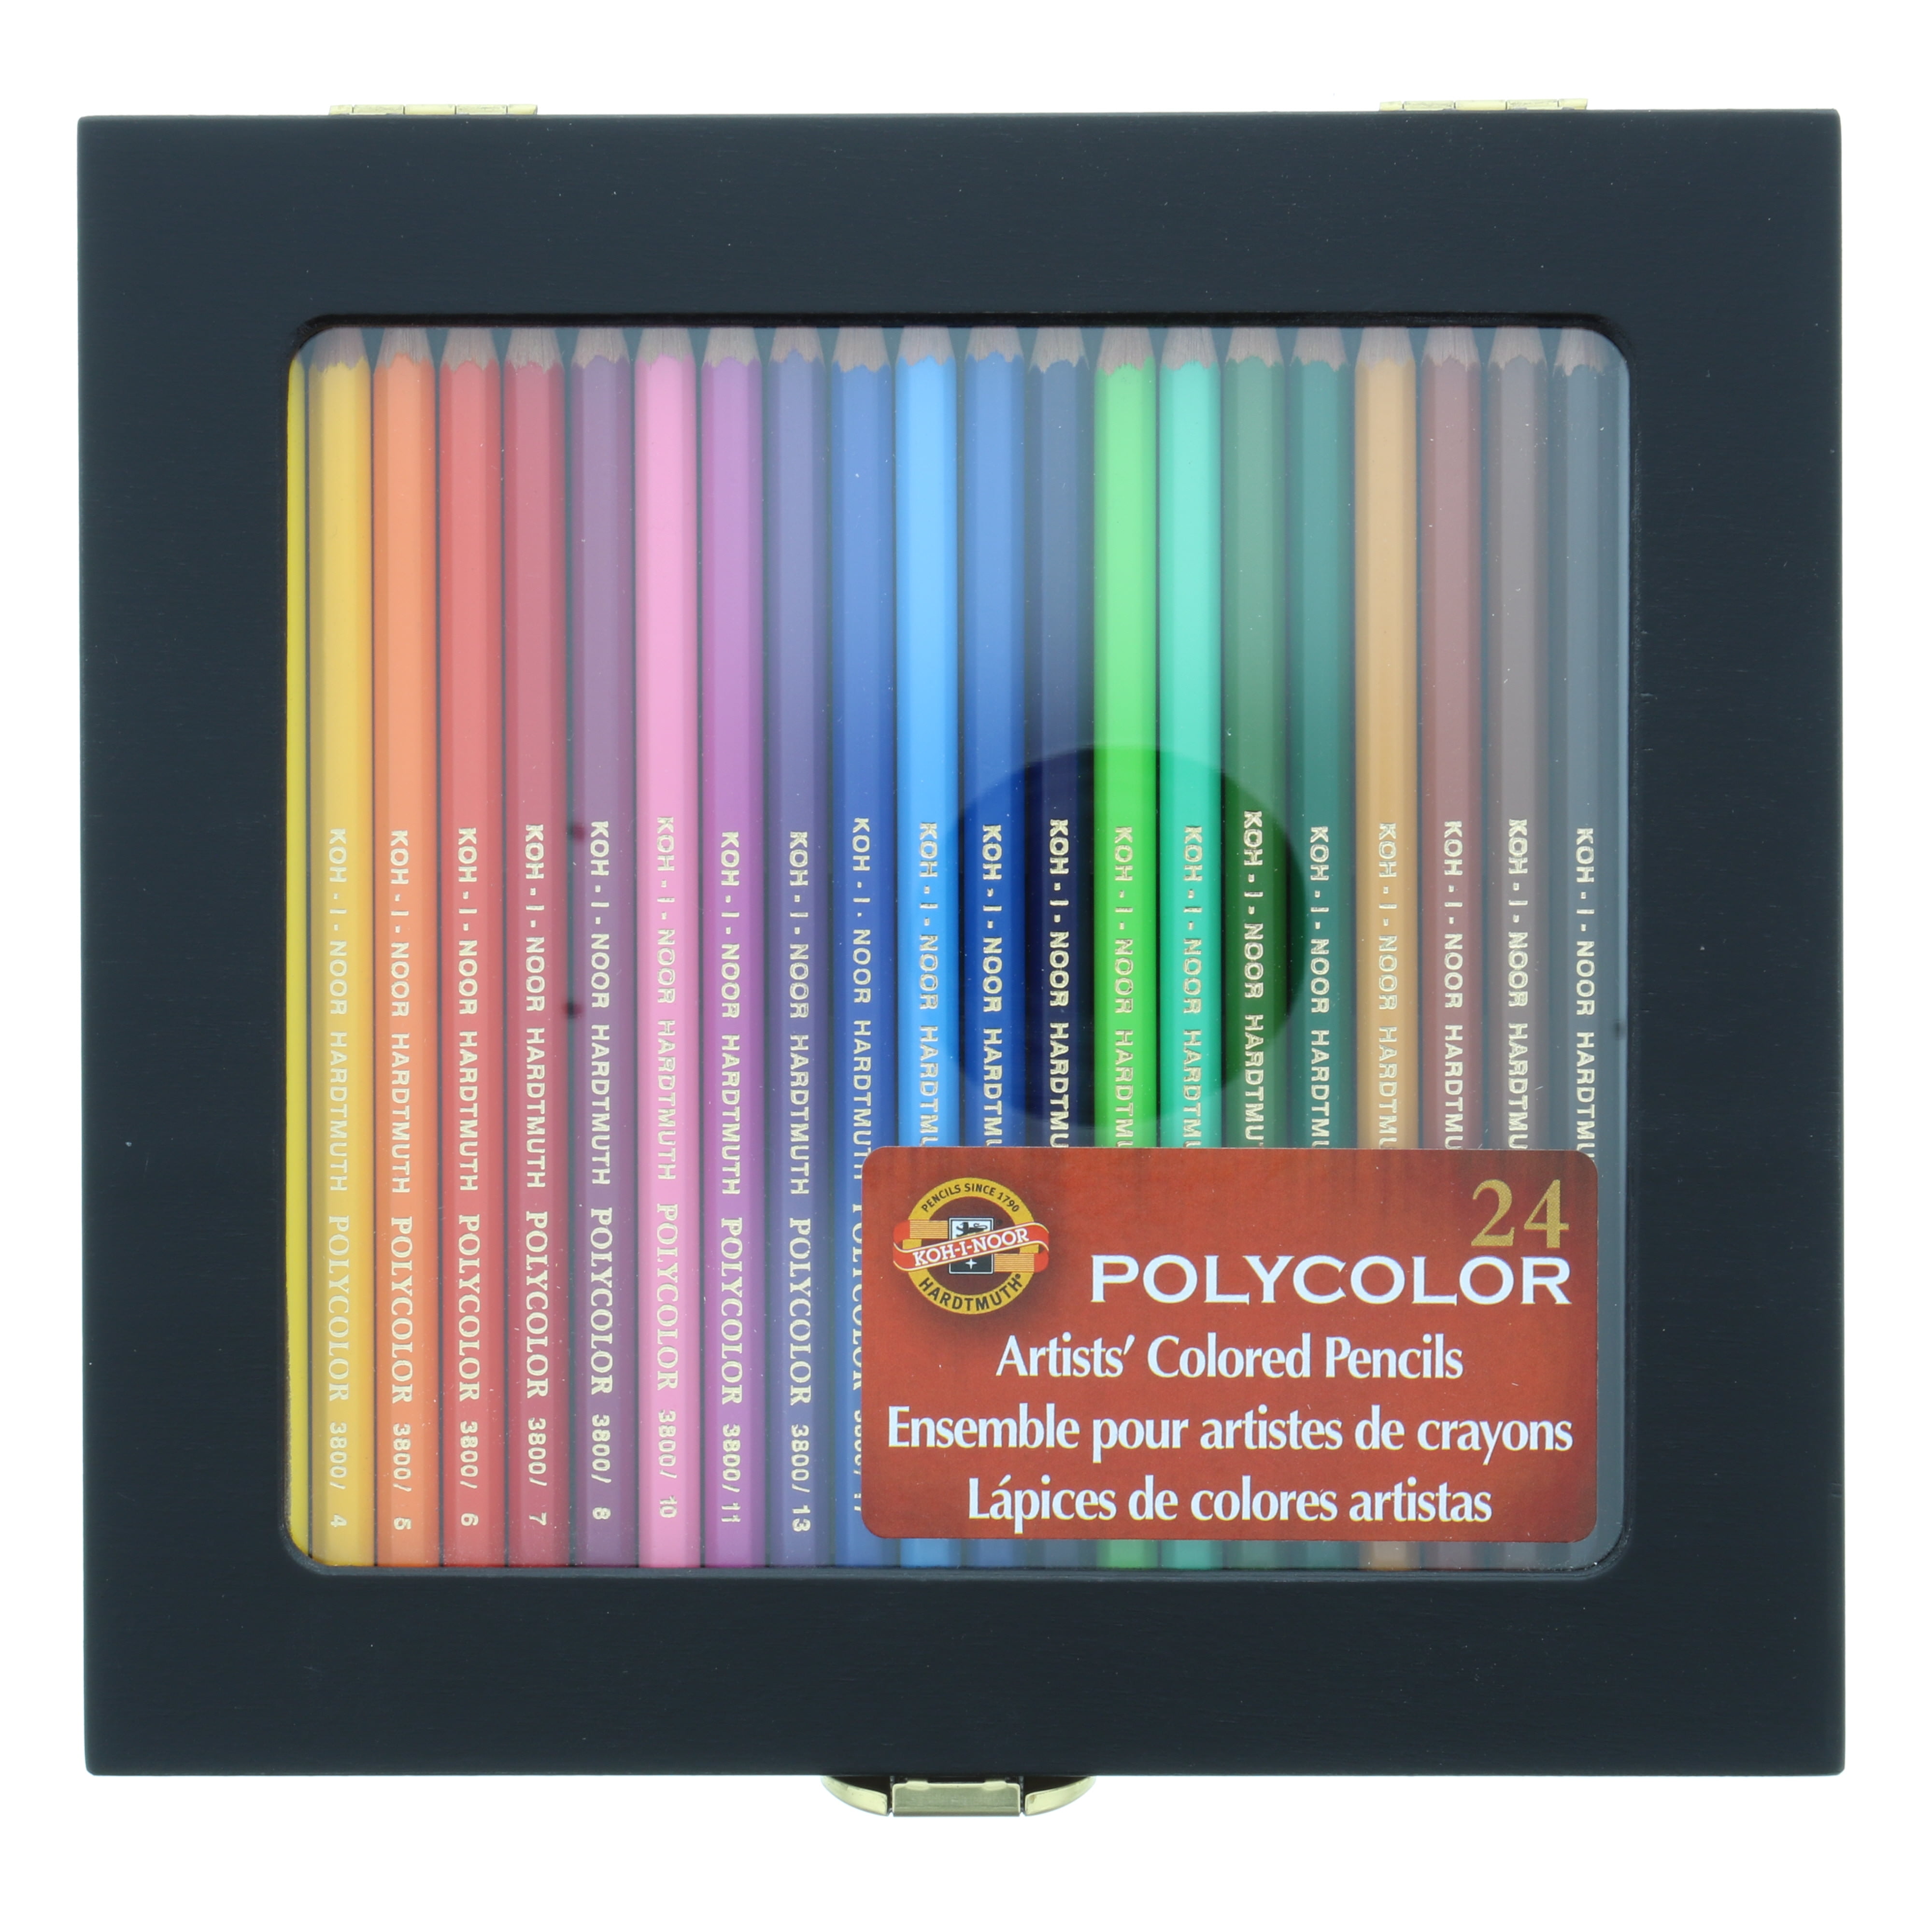 KOH-I-NOOR Era Eraser Pencil – soft tip – Foxy Studio